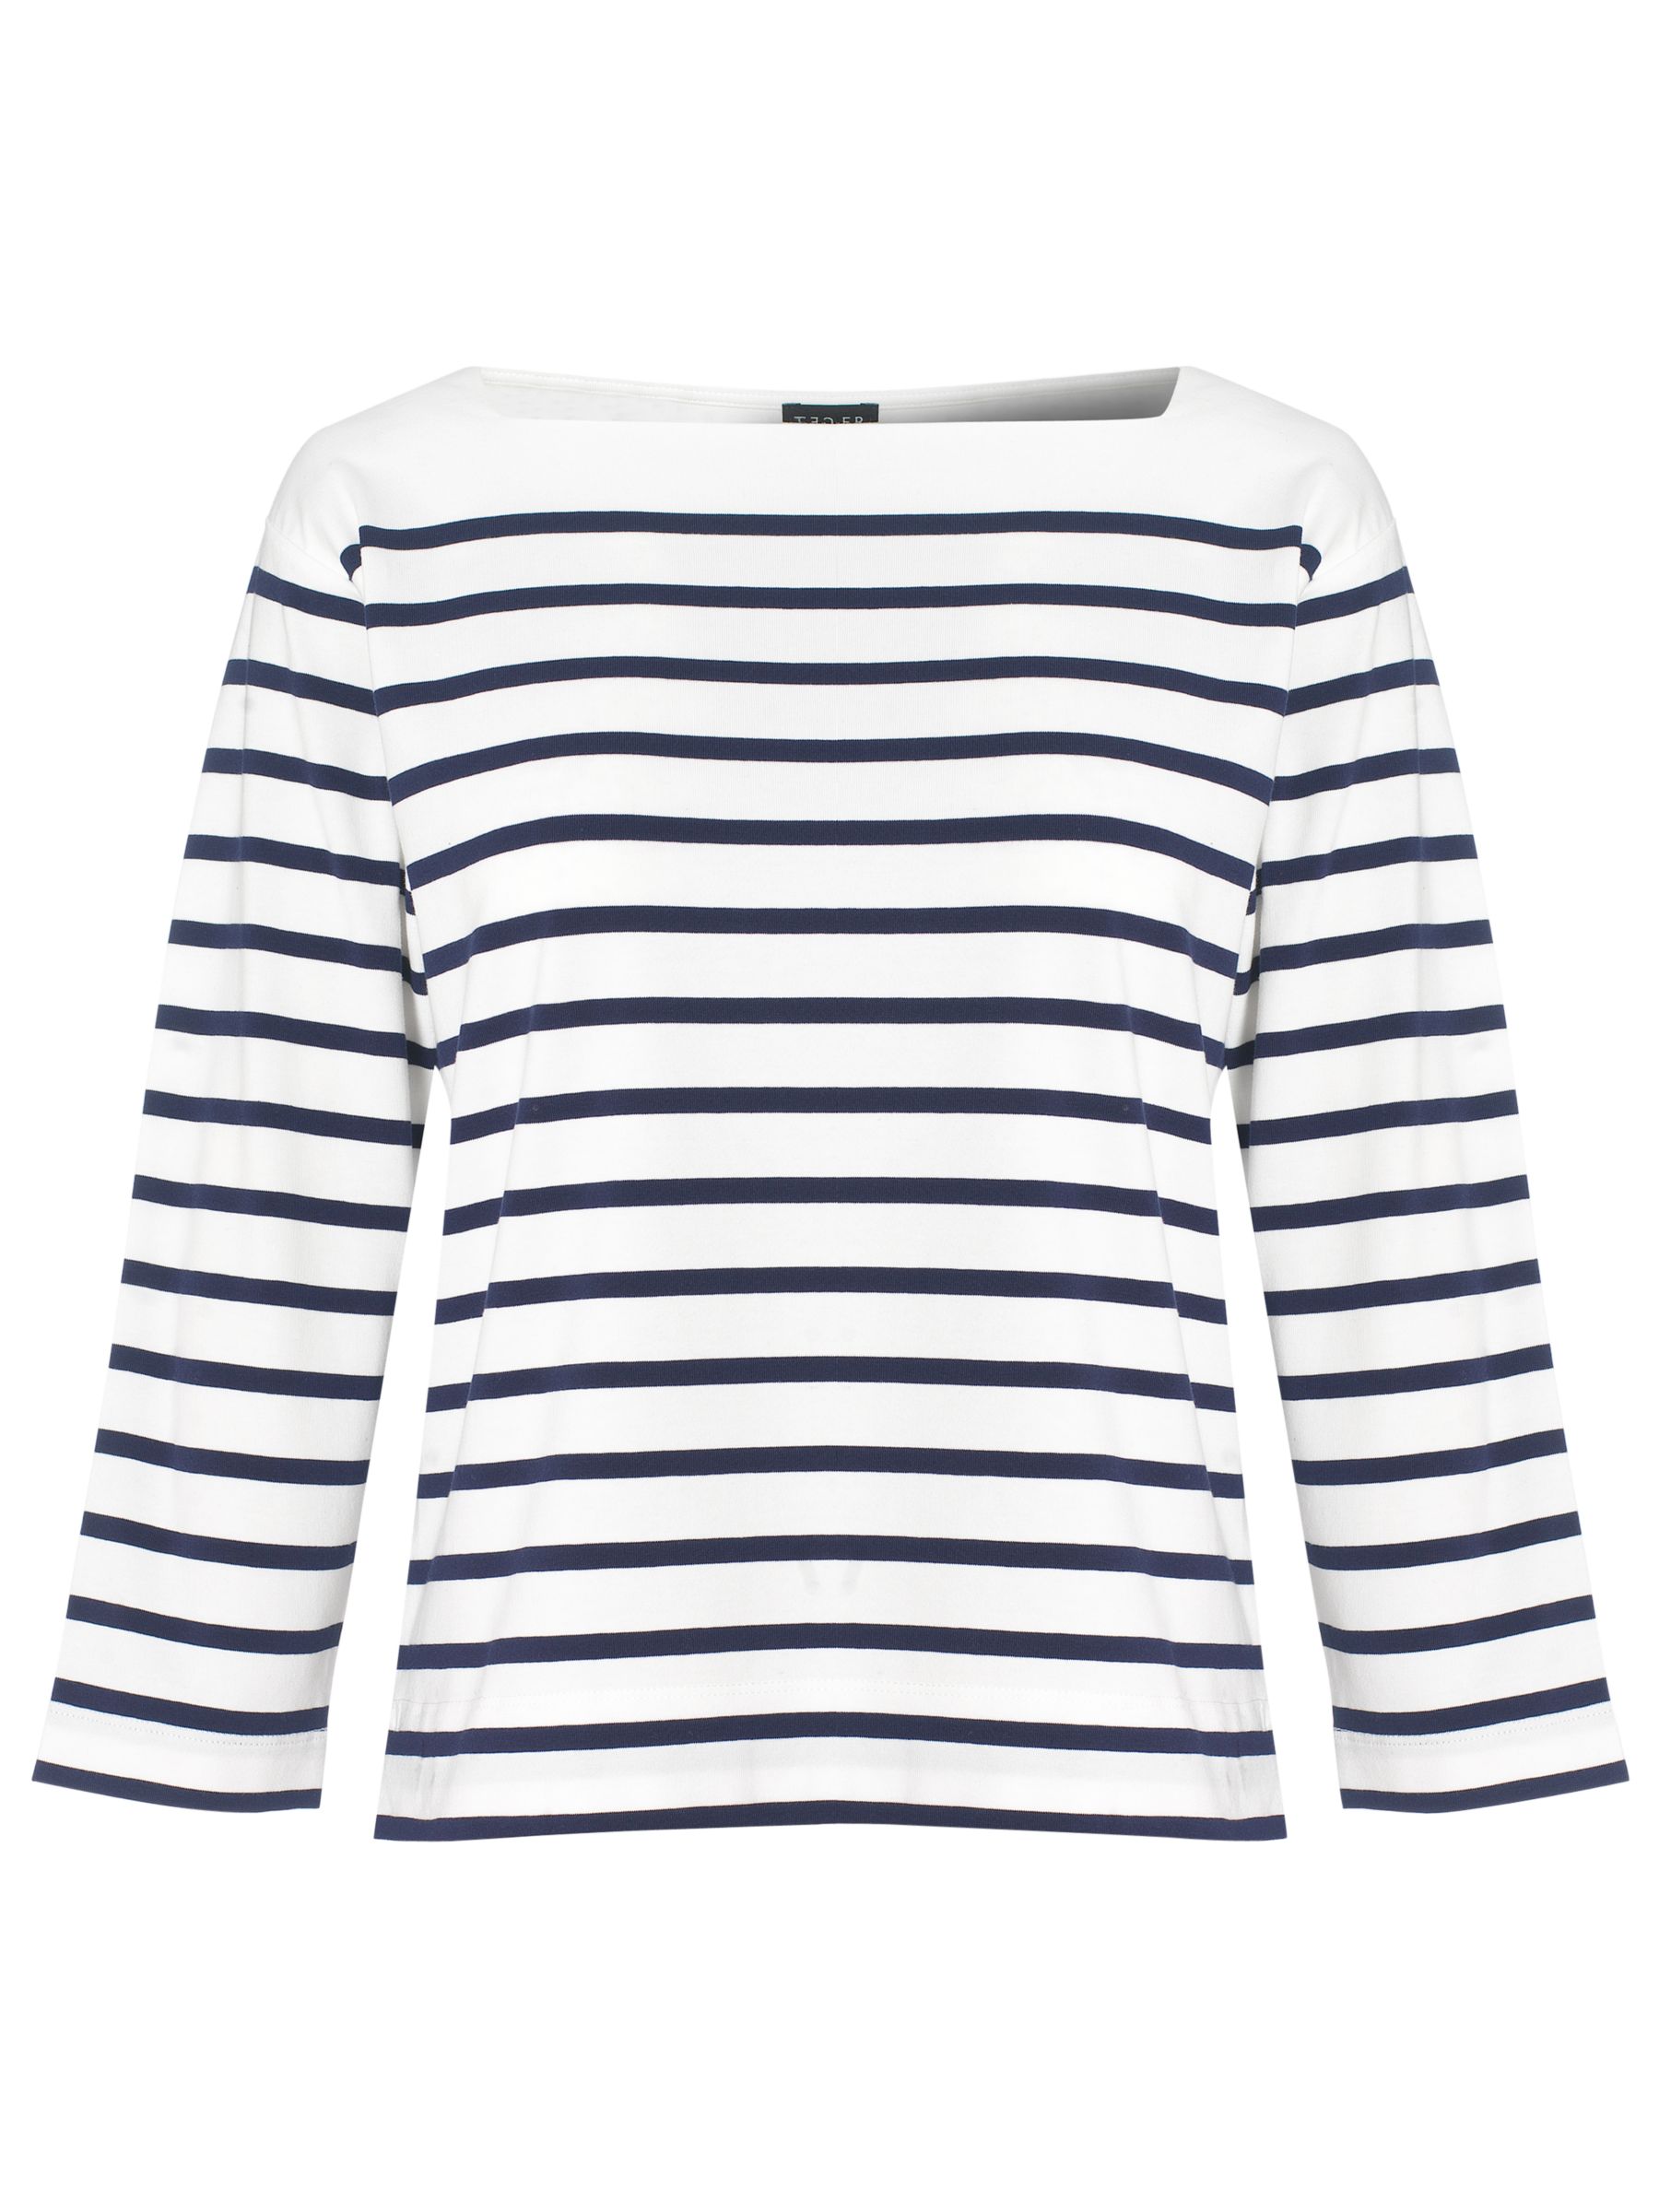 Jaeger Breton Stripe T-shirt, White